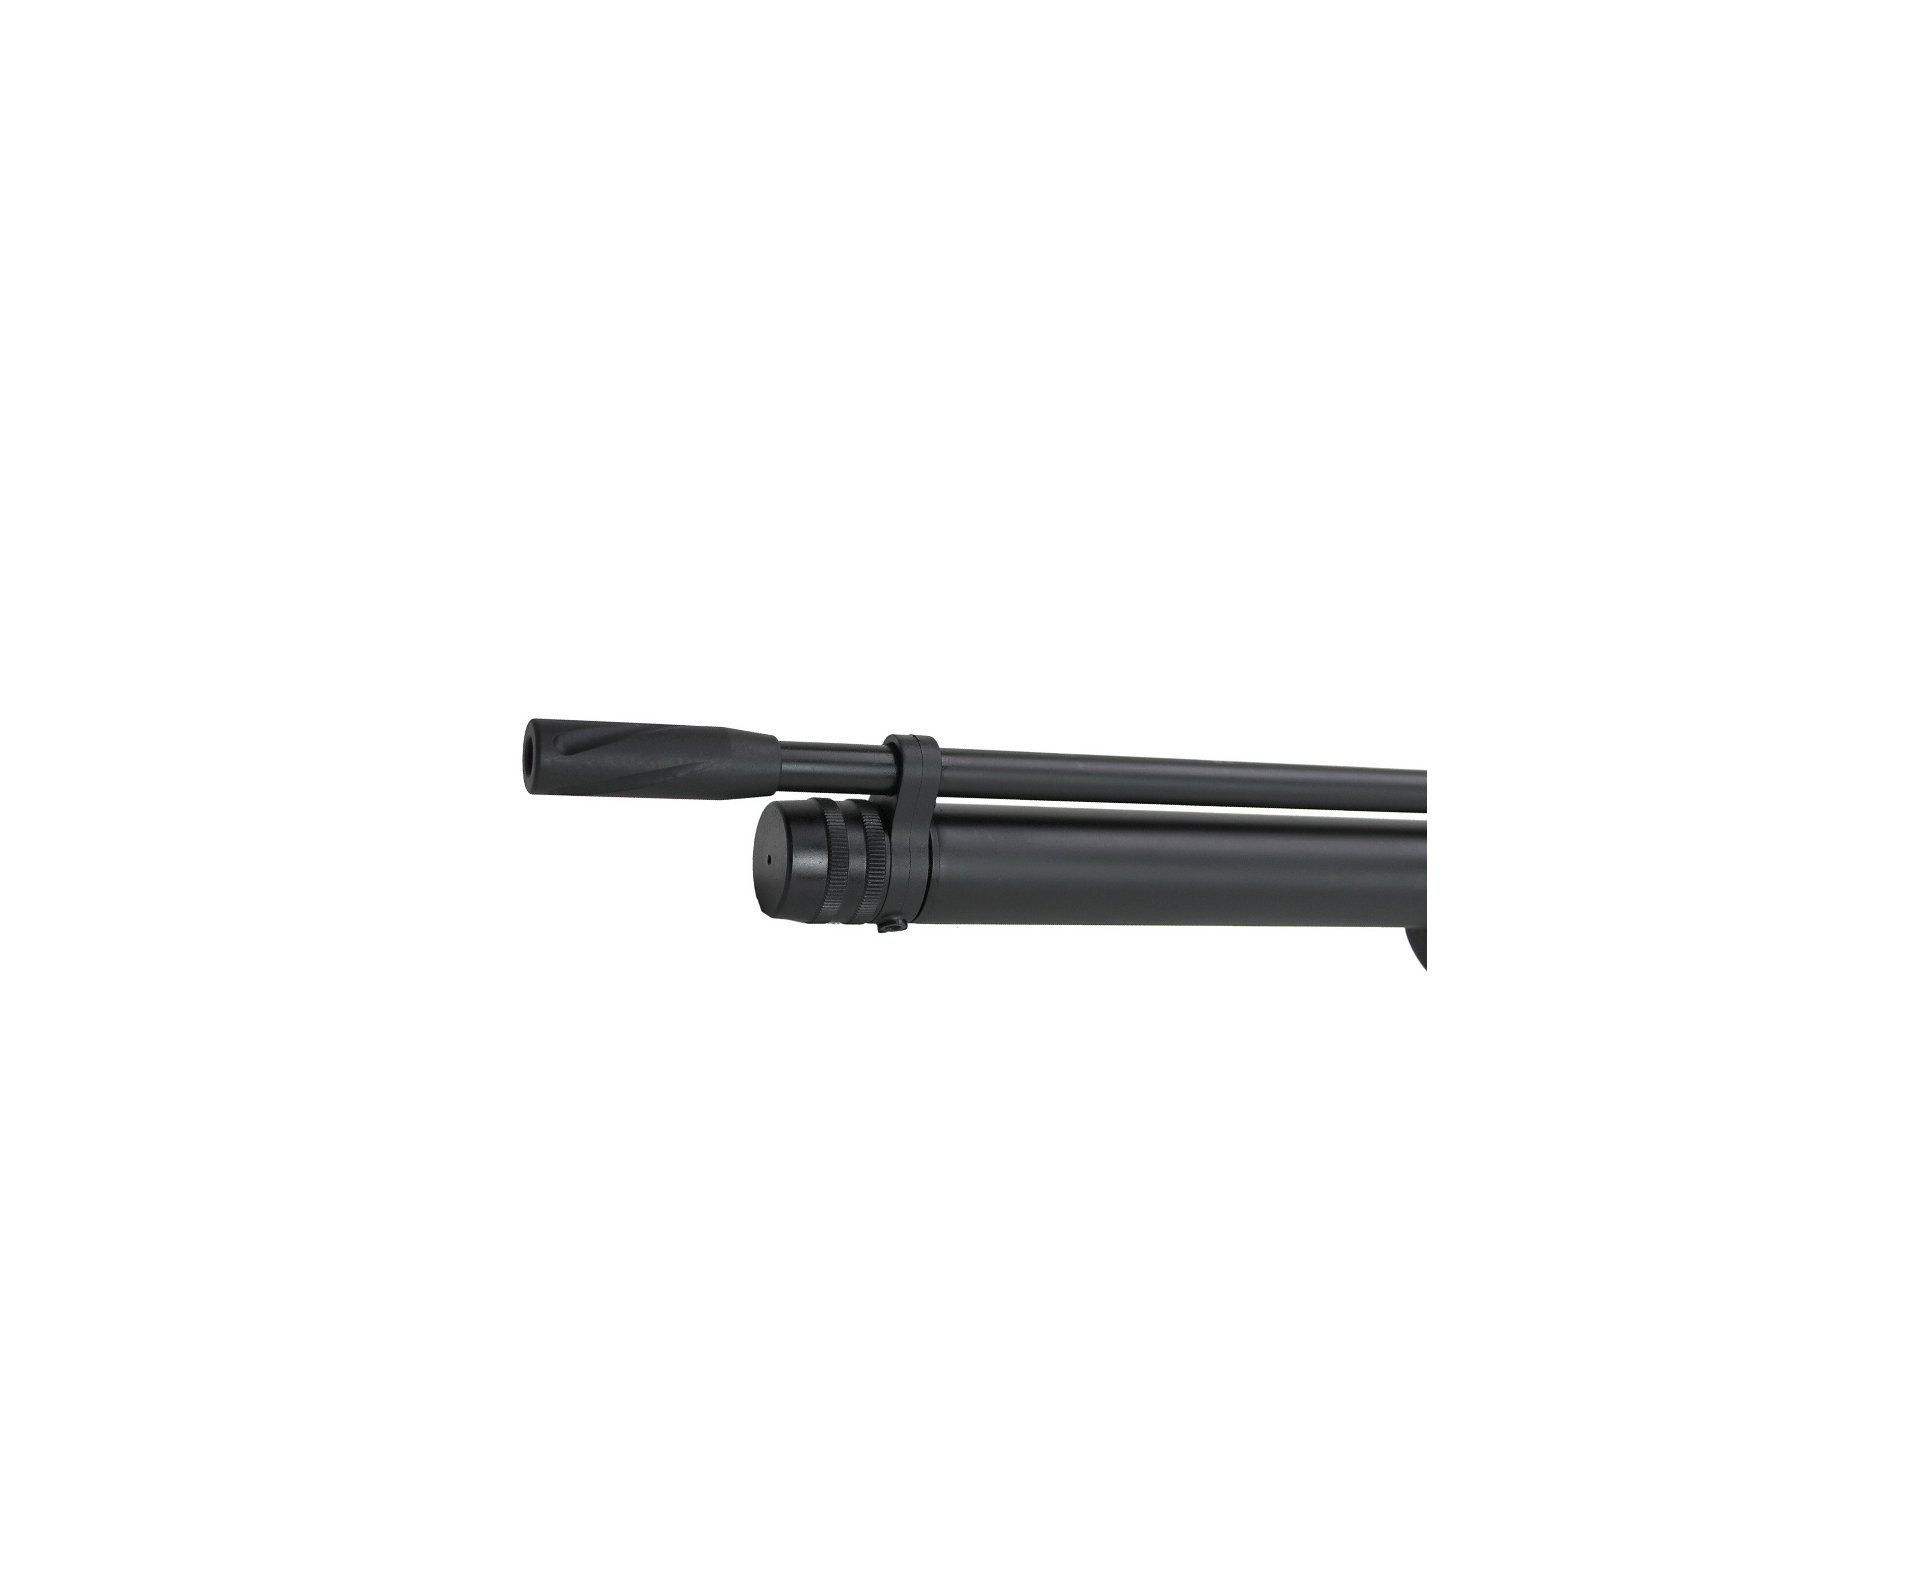 Artefato de Pressão Fixxar Kral PCP Puncher Nish W Air Rifle 5,5mm